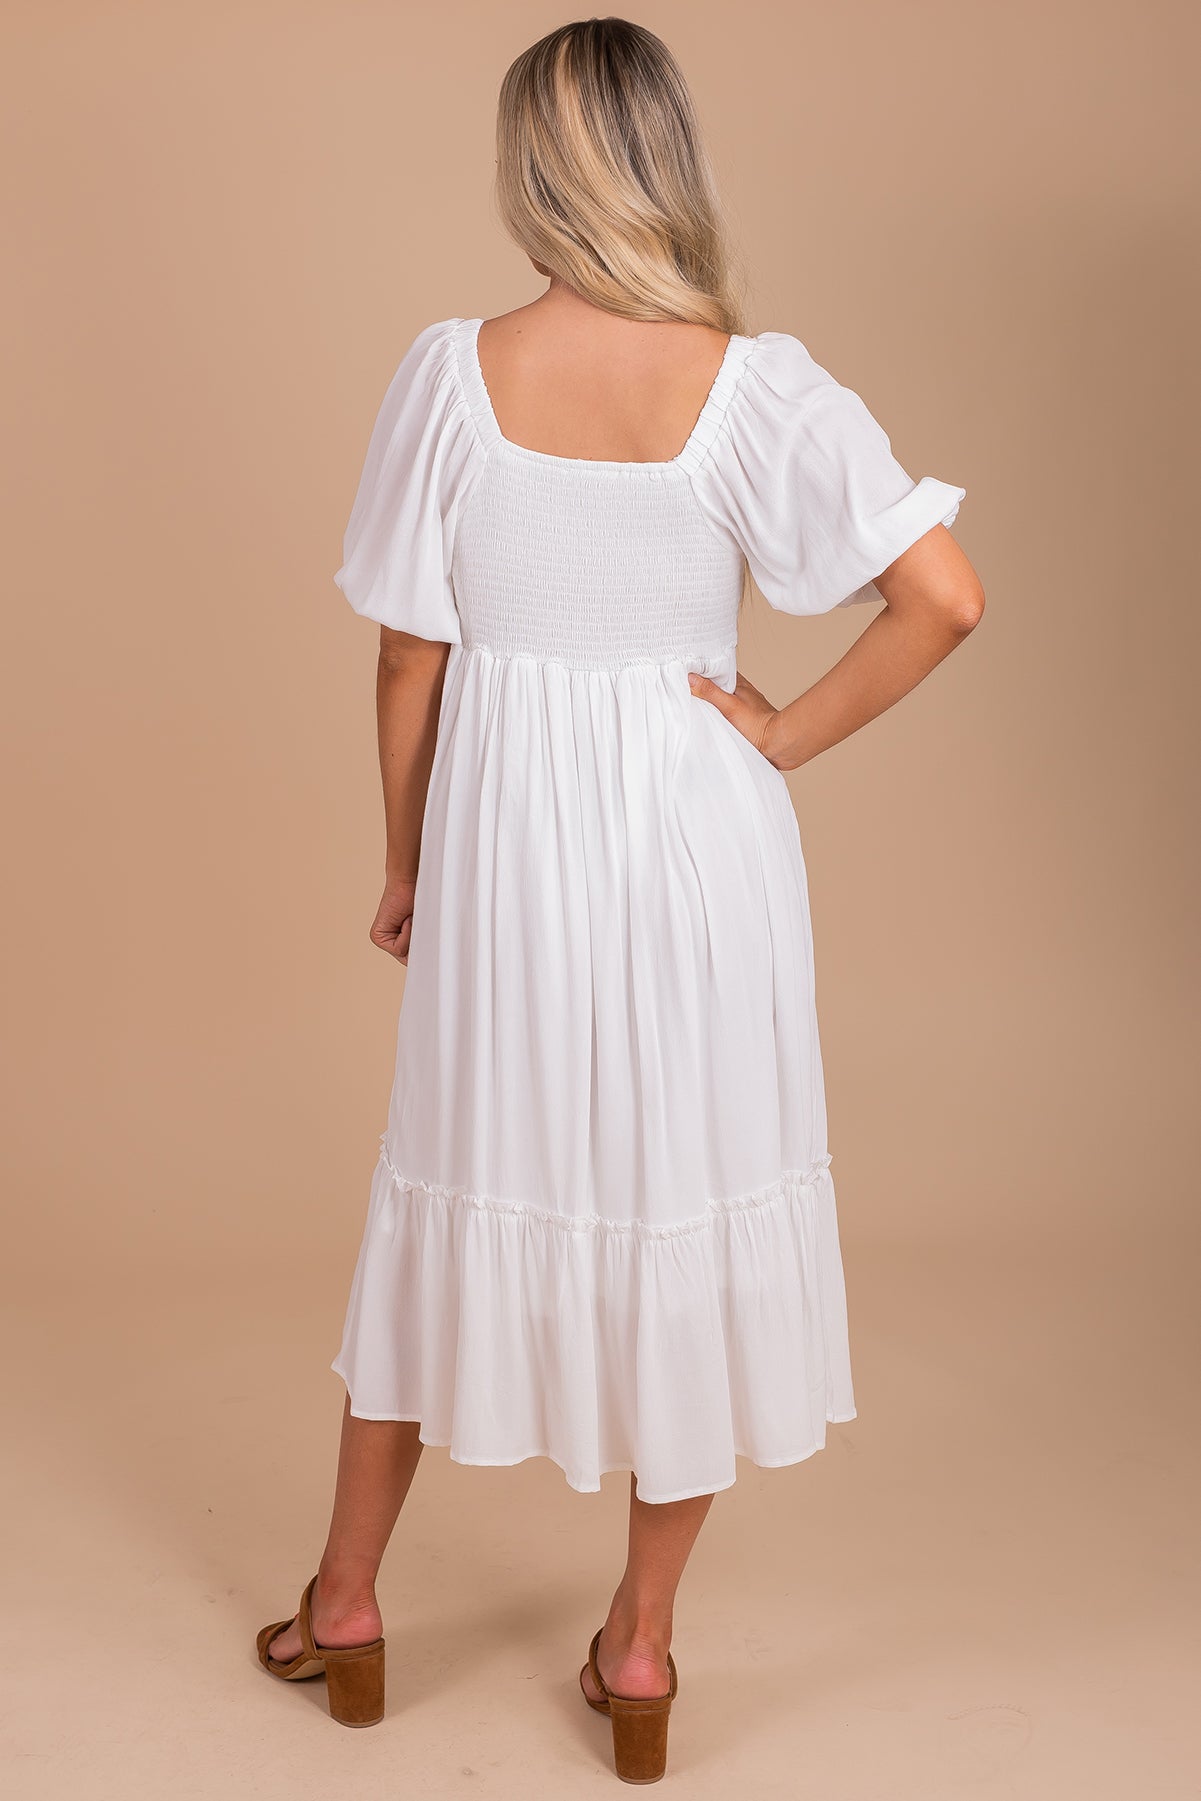 Women's White Dress with Smocked Bodice